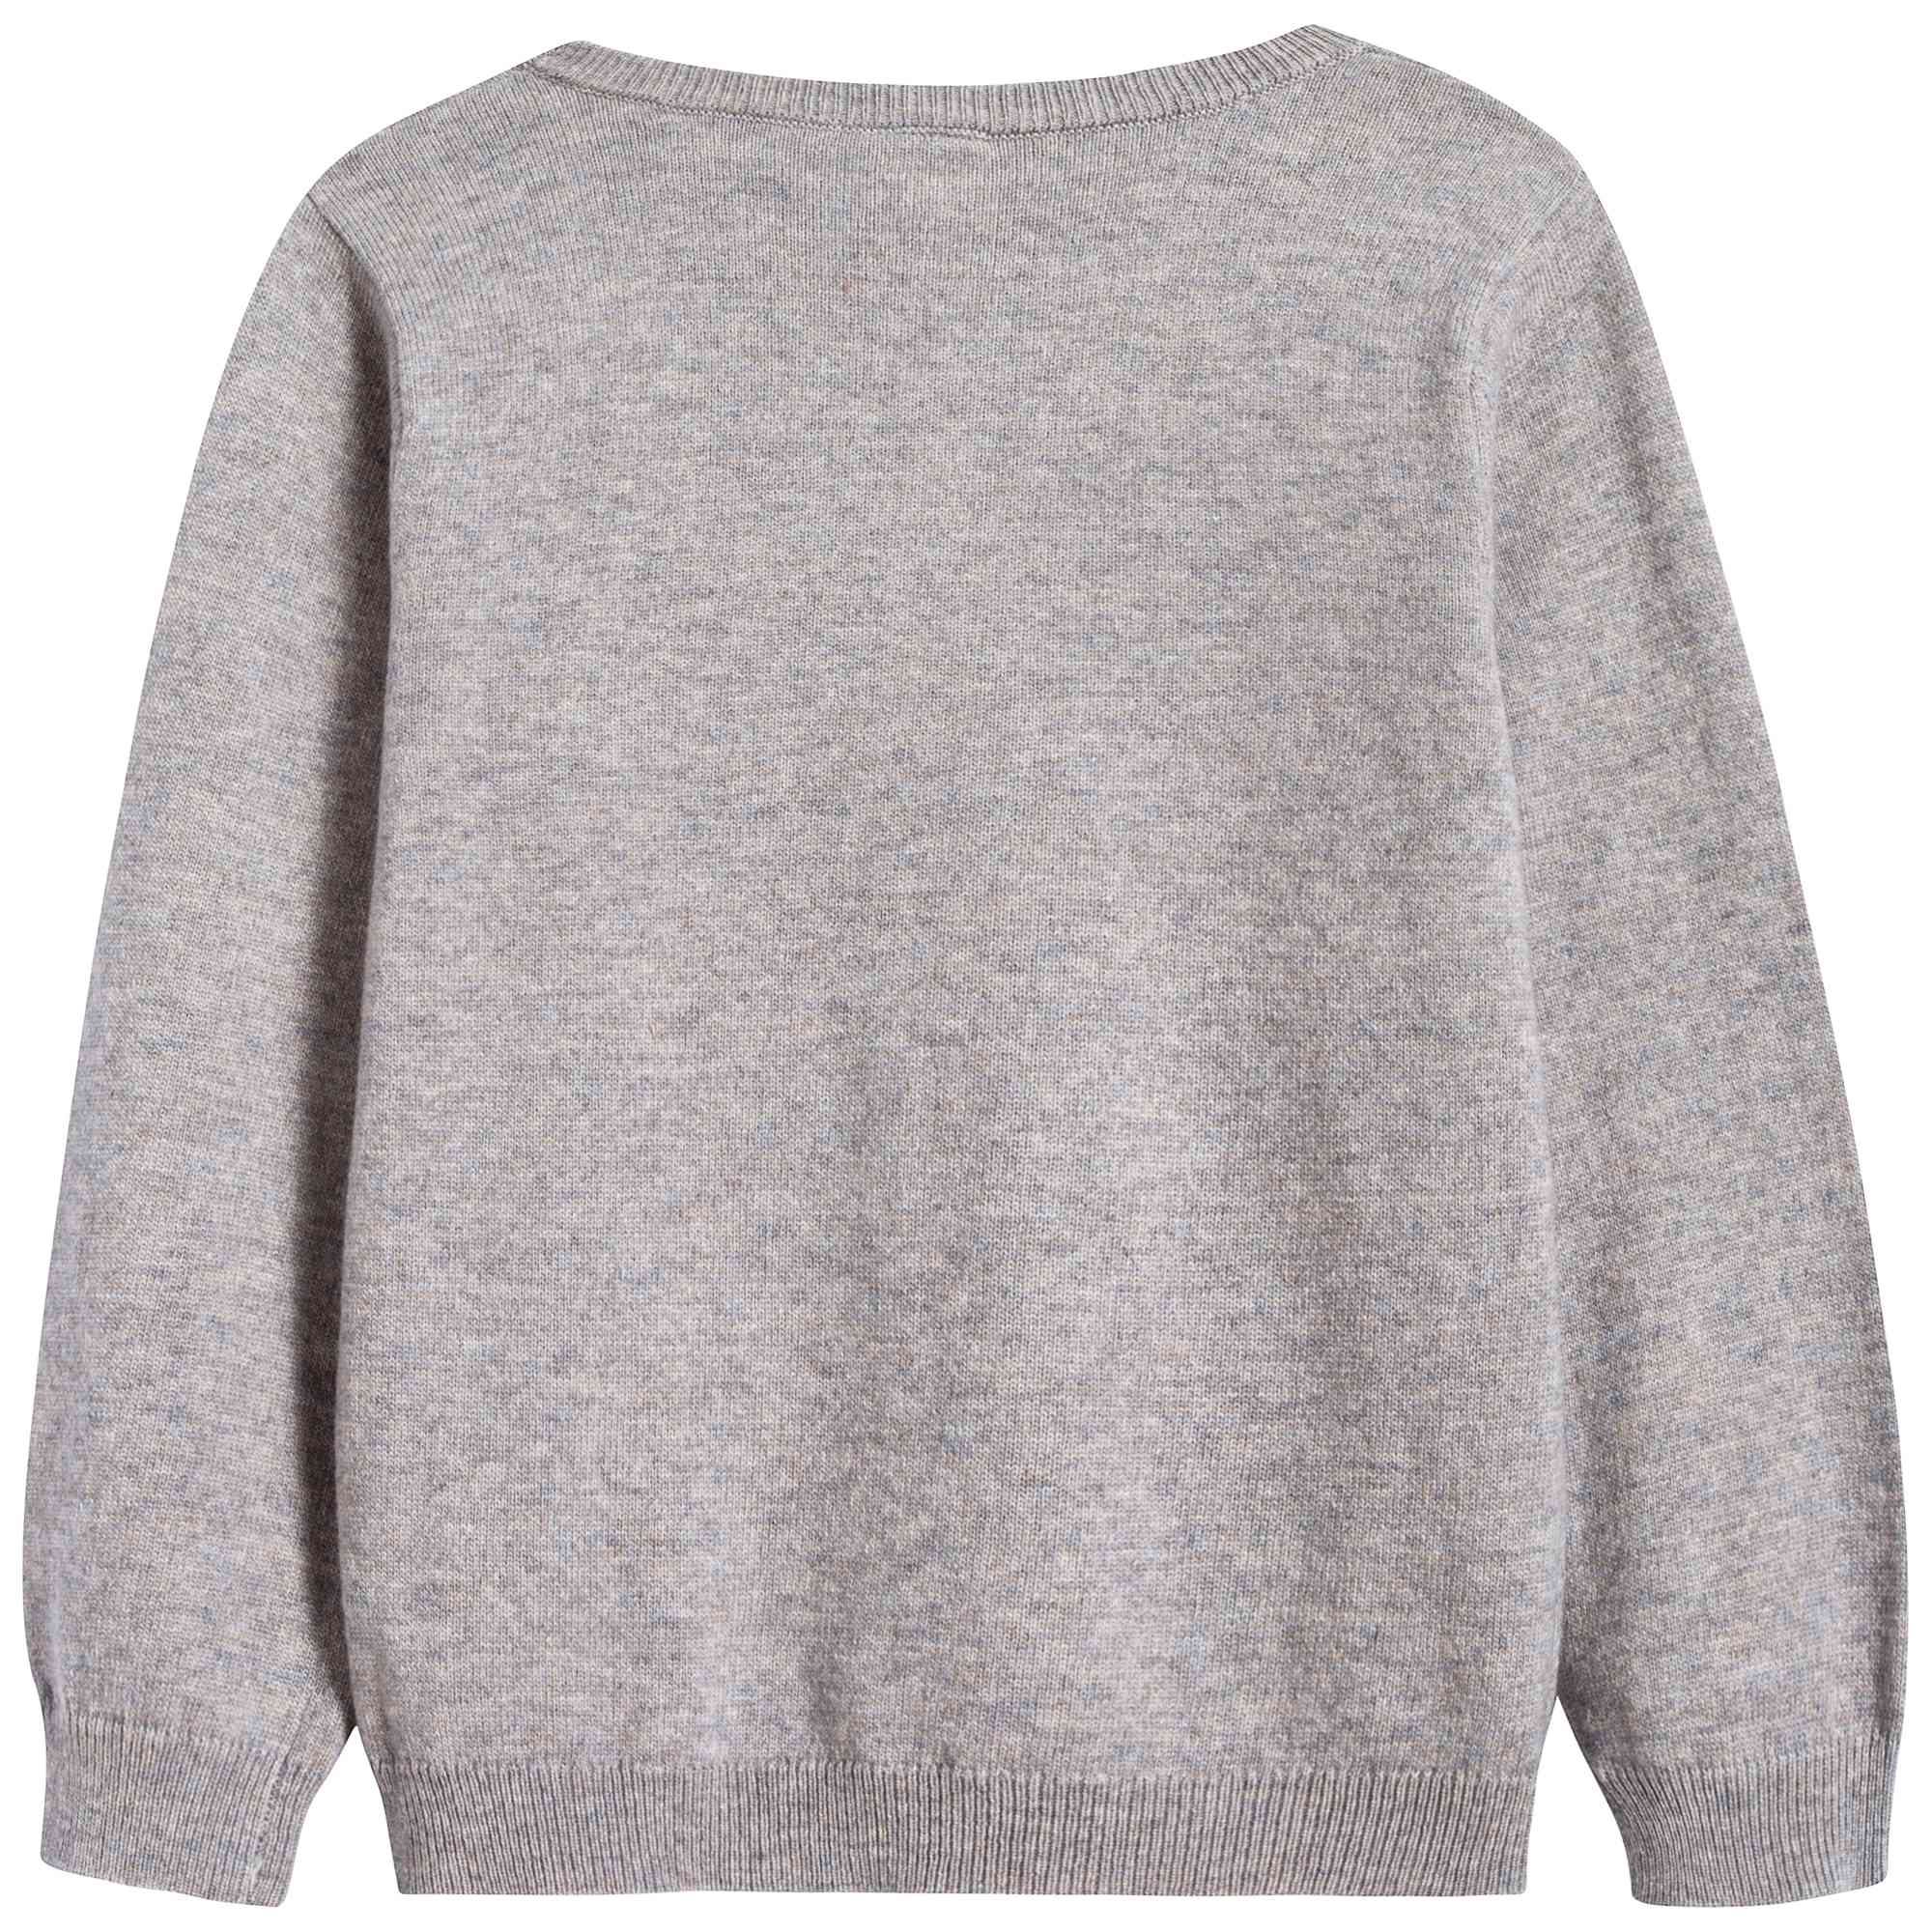 Girls Chine Grey Sweater